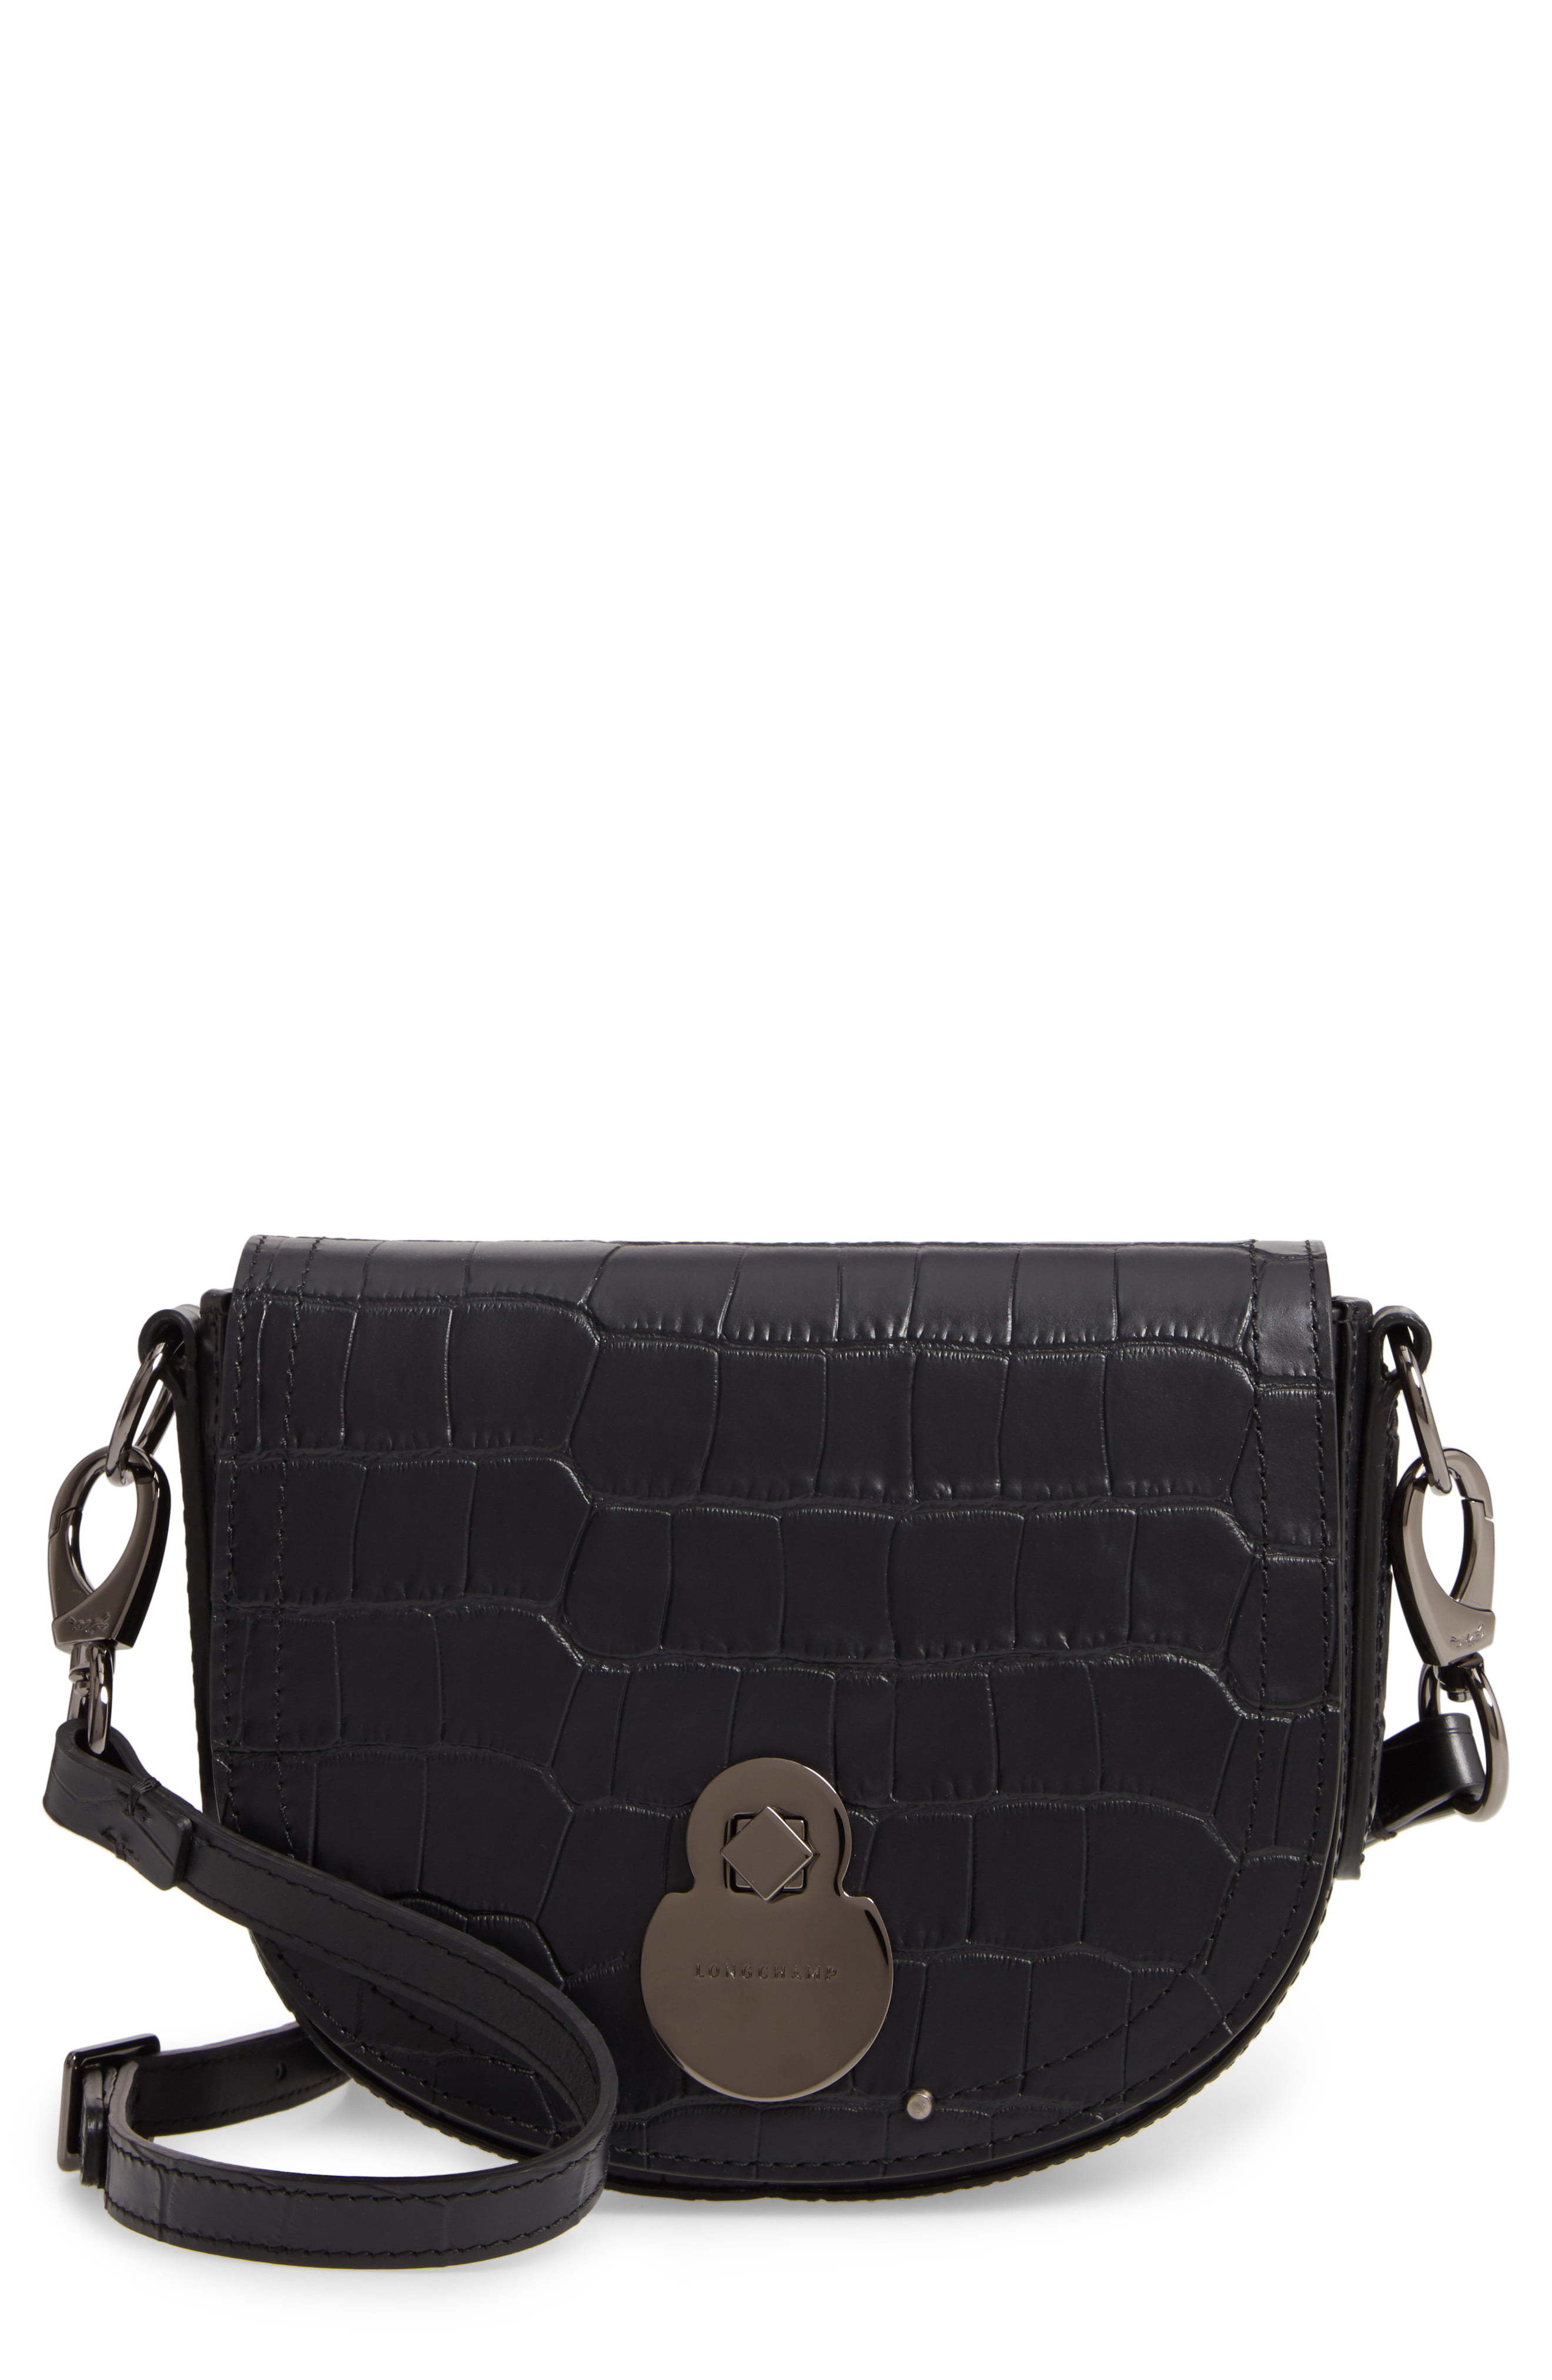 Longchamp Small Cavalcade Leather Crossbody Bag, $575 | Nordstrom ...